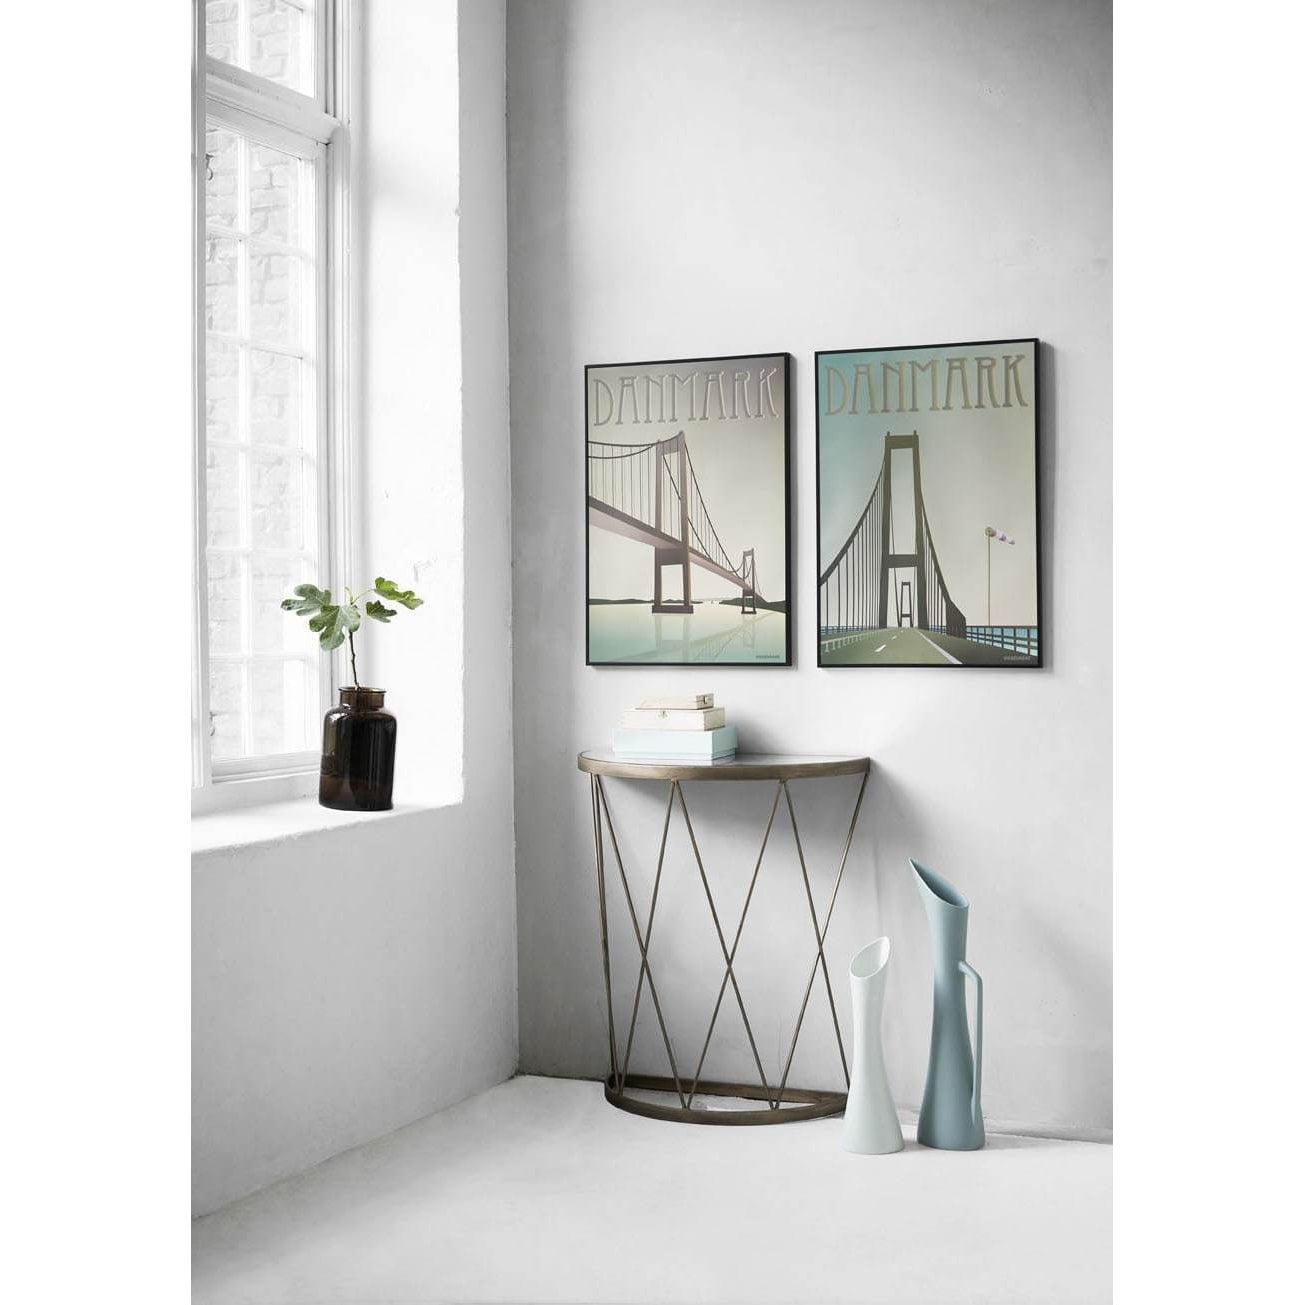 Vissevasse Danemark Storebælts Bridge Affiche, 15 x21 cm